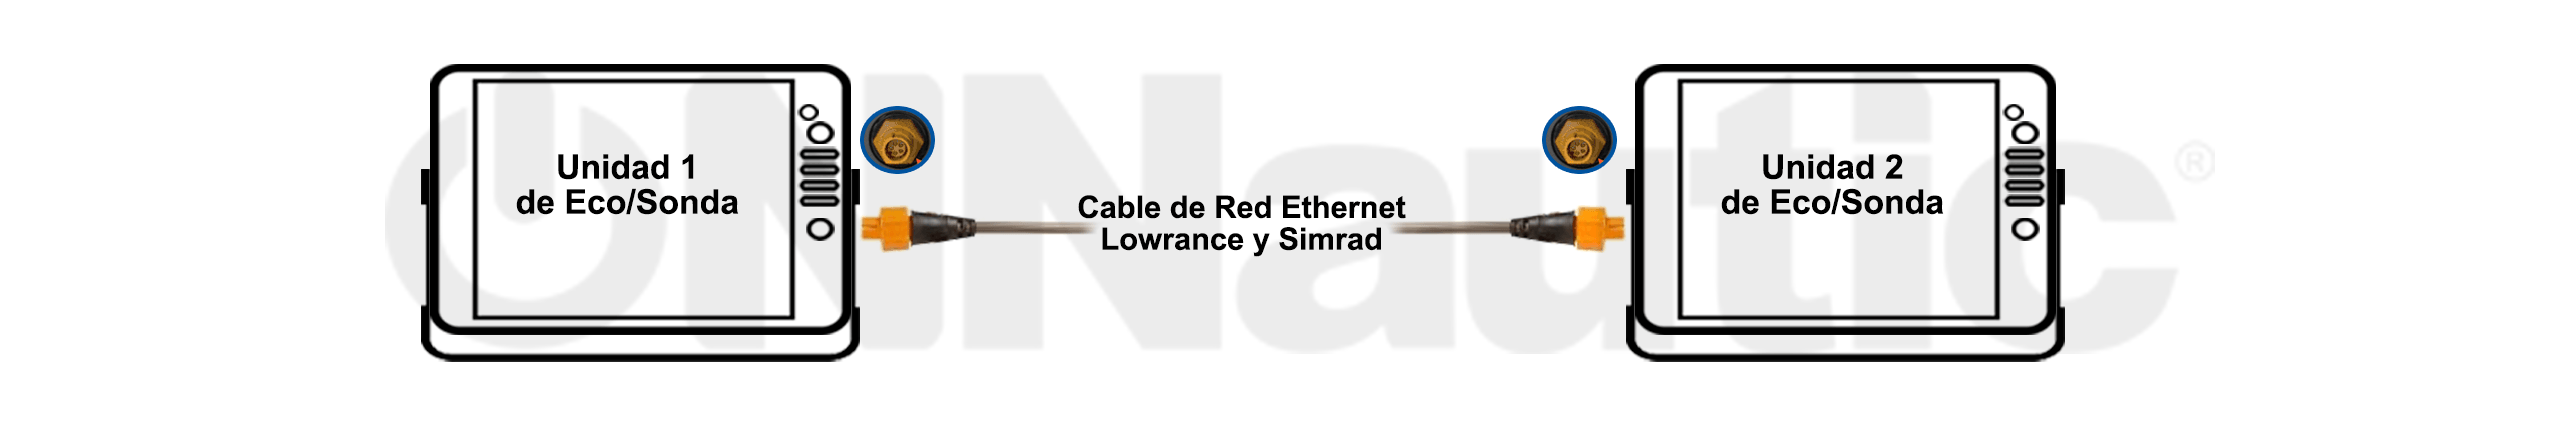 Diagrama Lowrance Simrad Ethernet